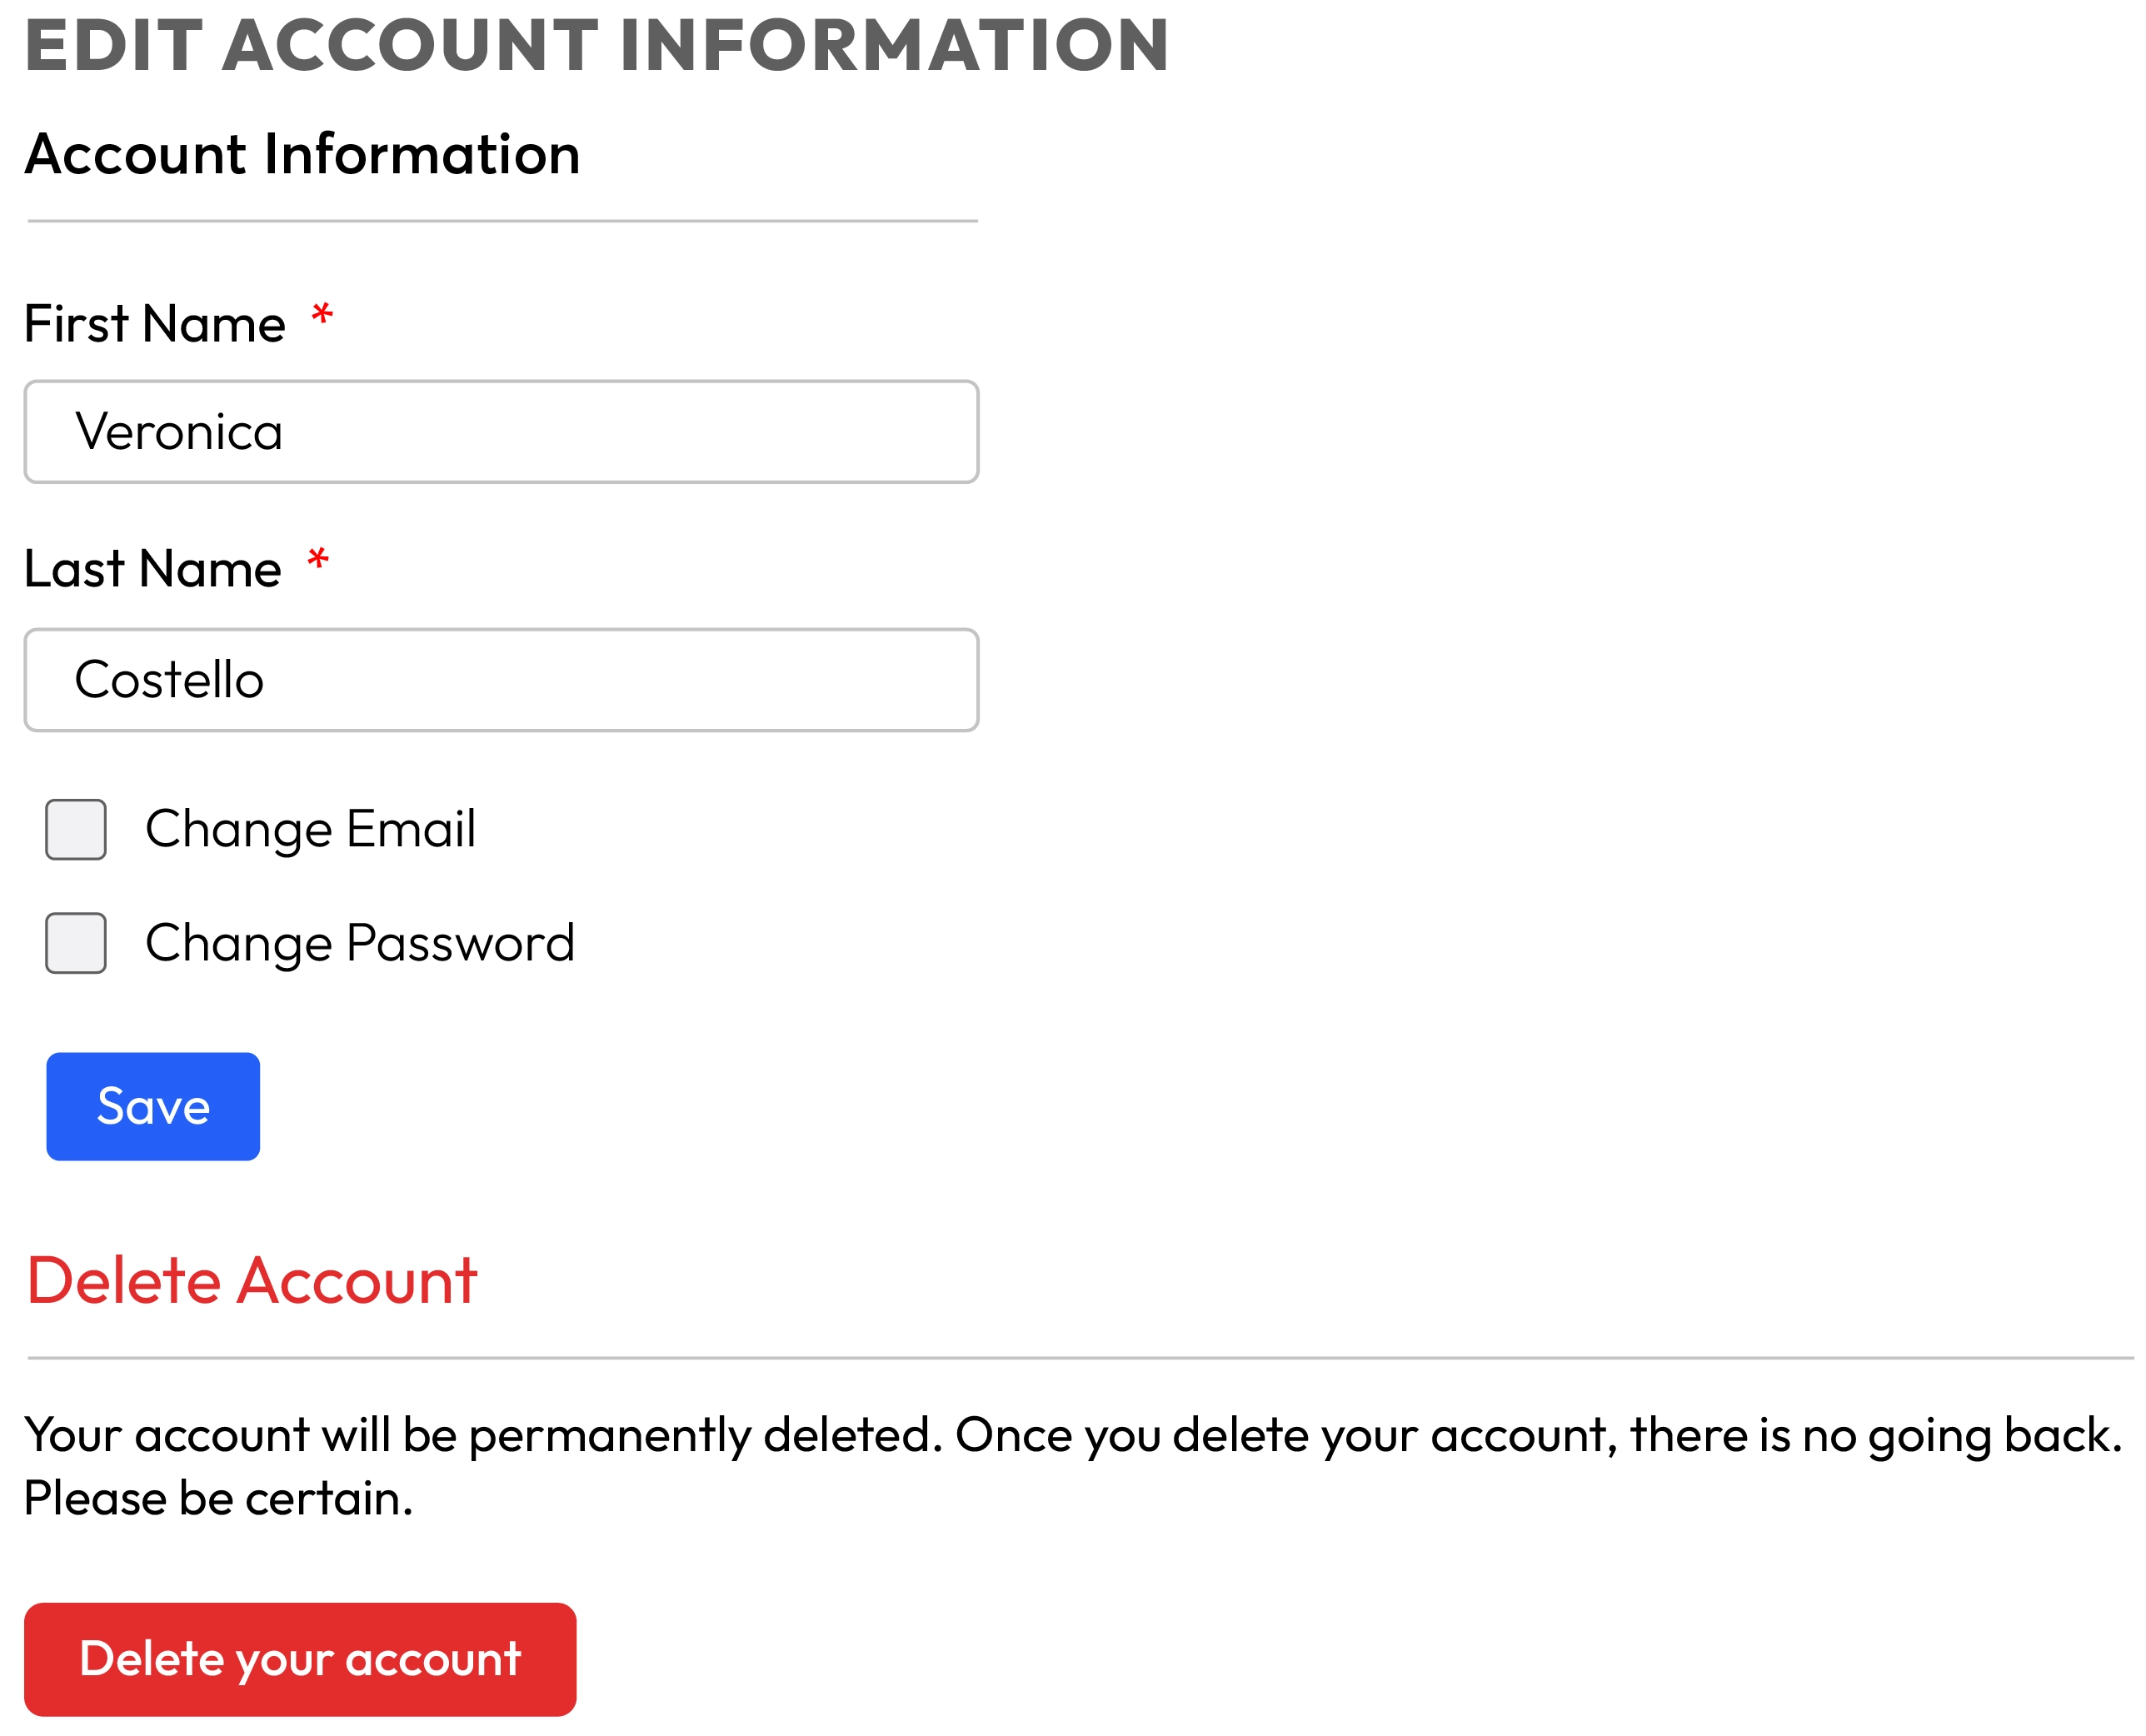 Remove customers' accounts